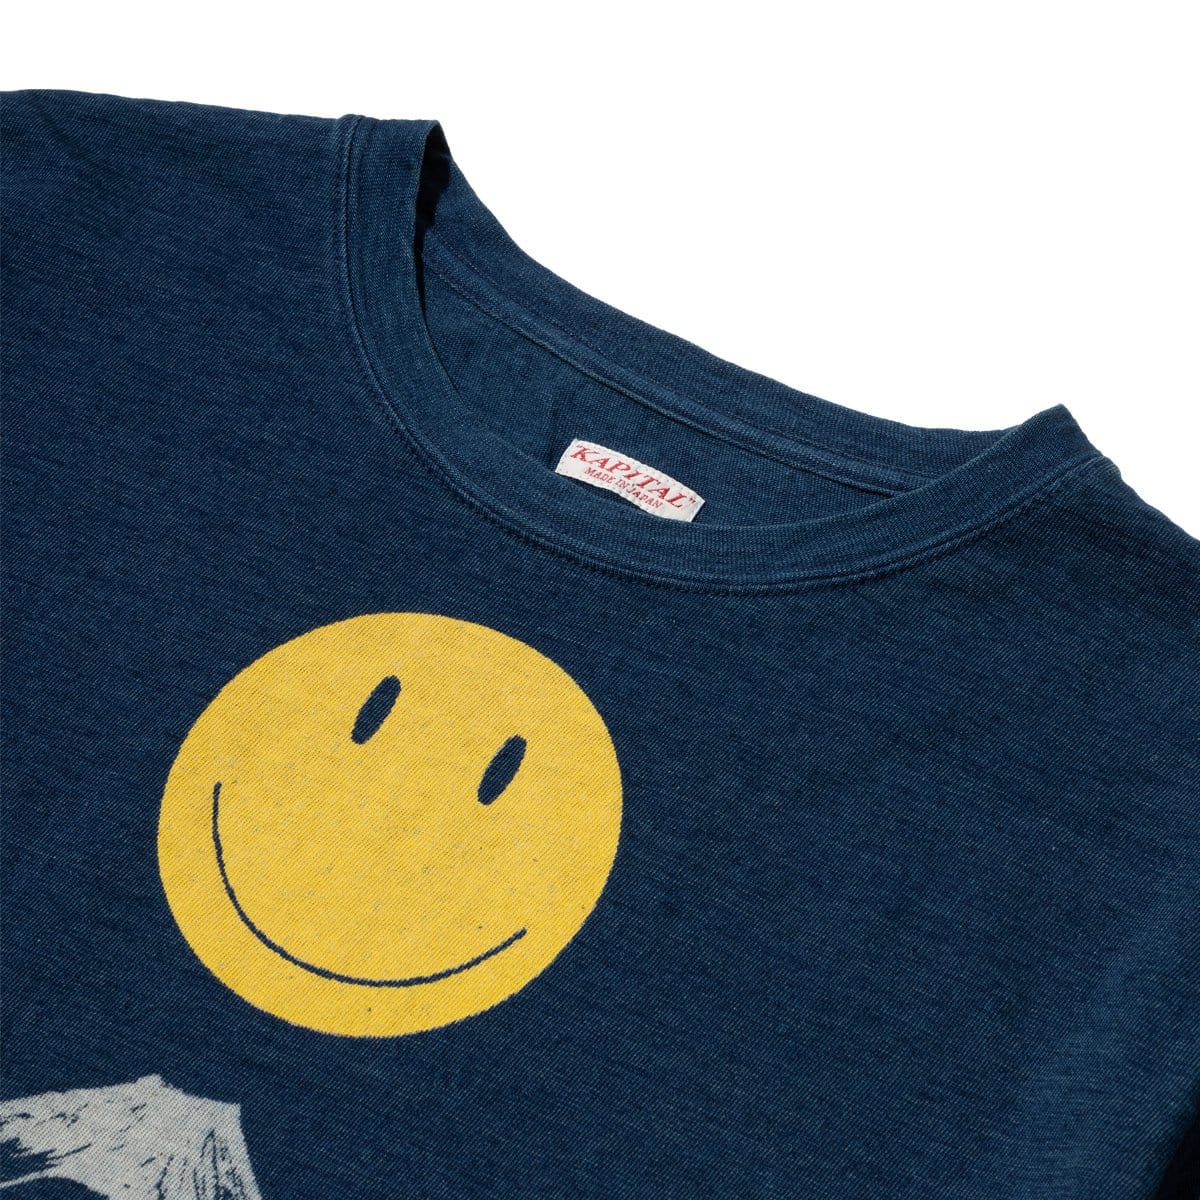 Kapital T-Shirts IDG JERSEY CREW T (MIRRORED FUJI SMILE)